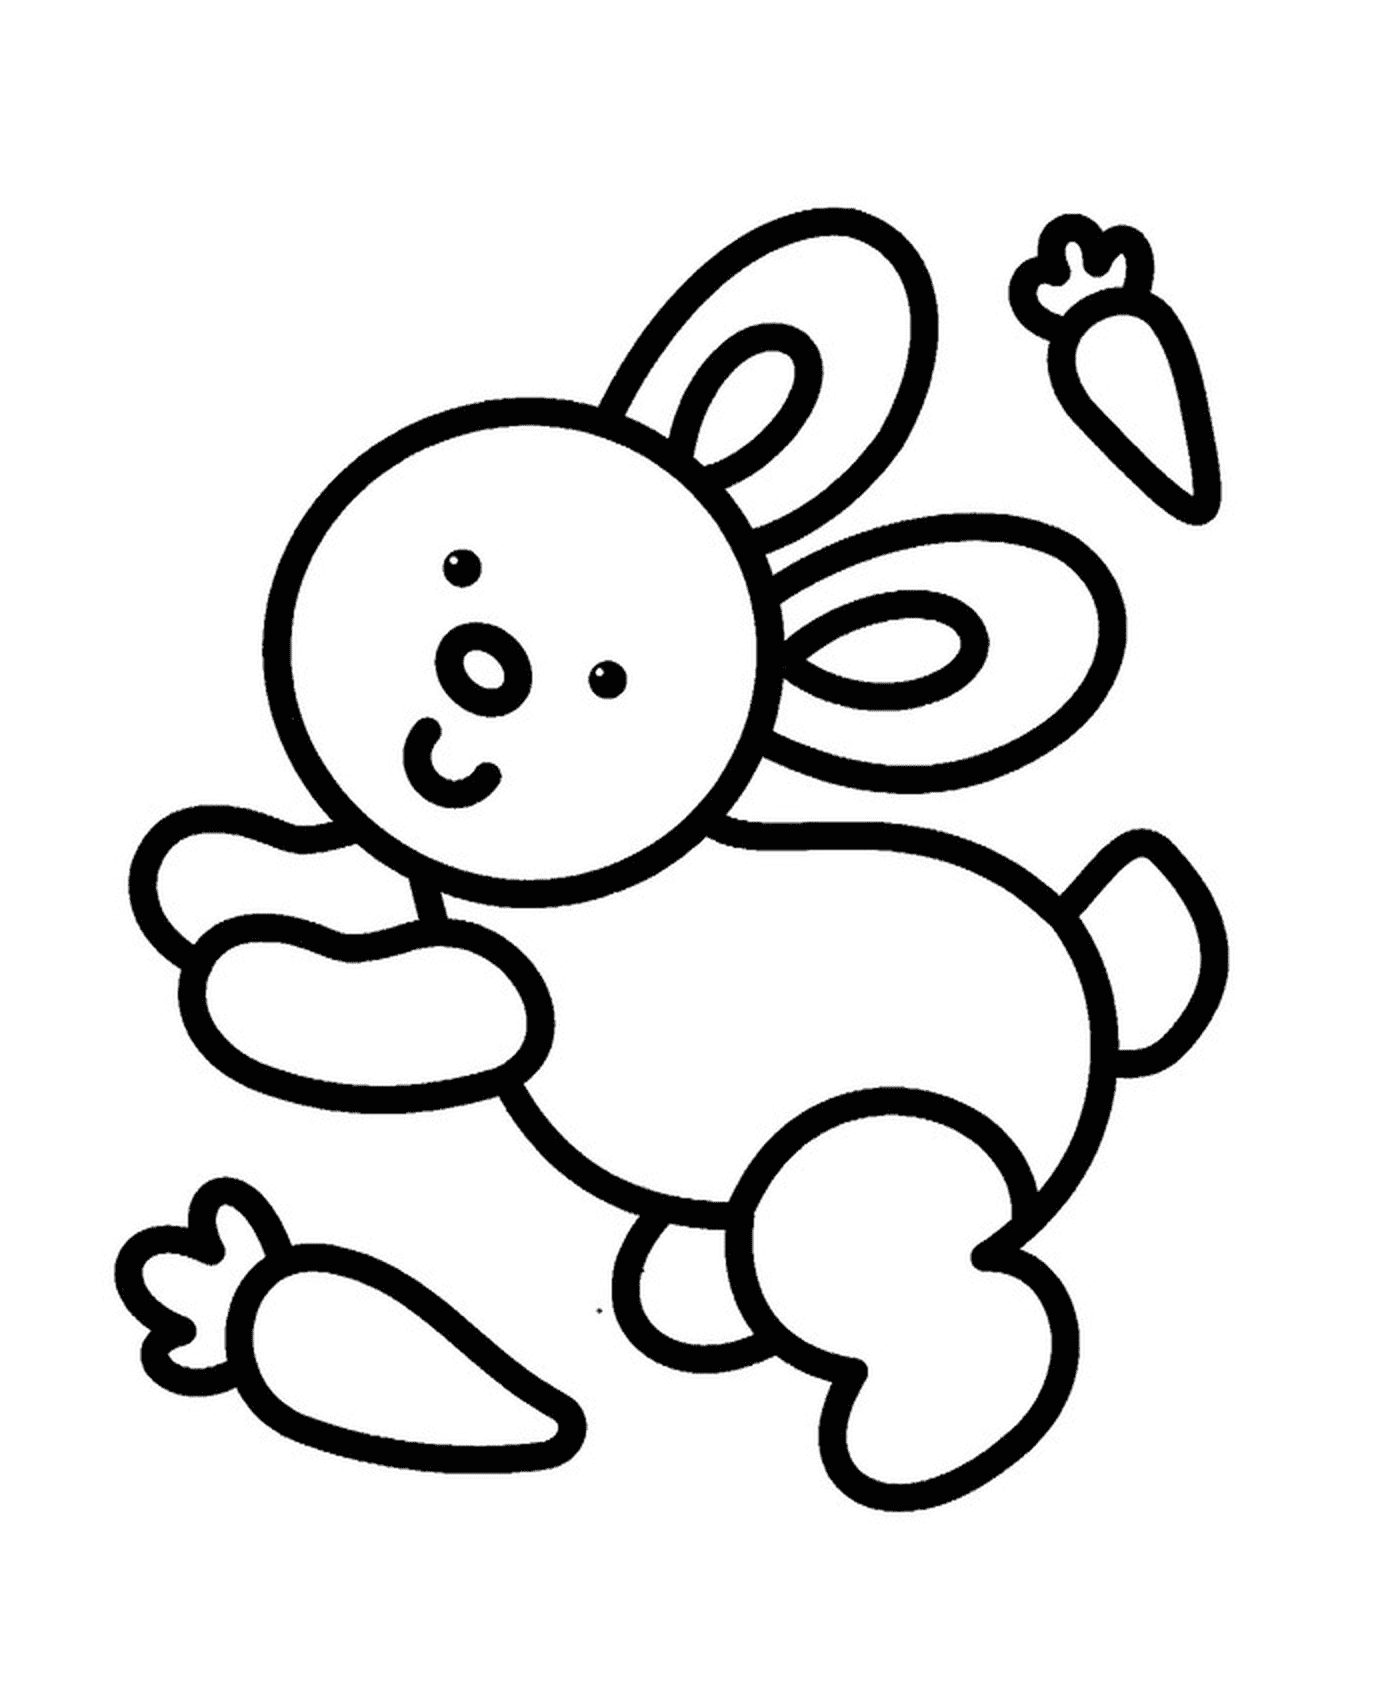  An easy to draw rabbit for kindergarten children 